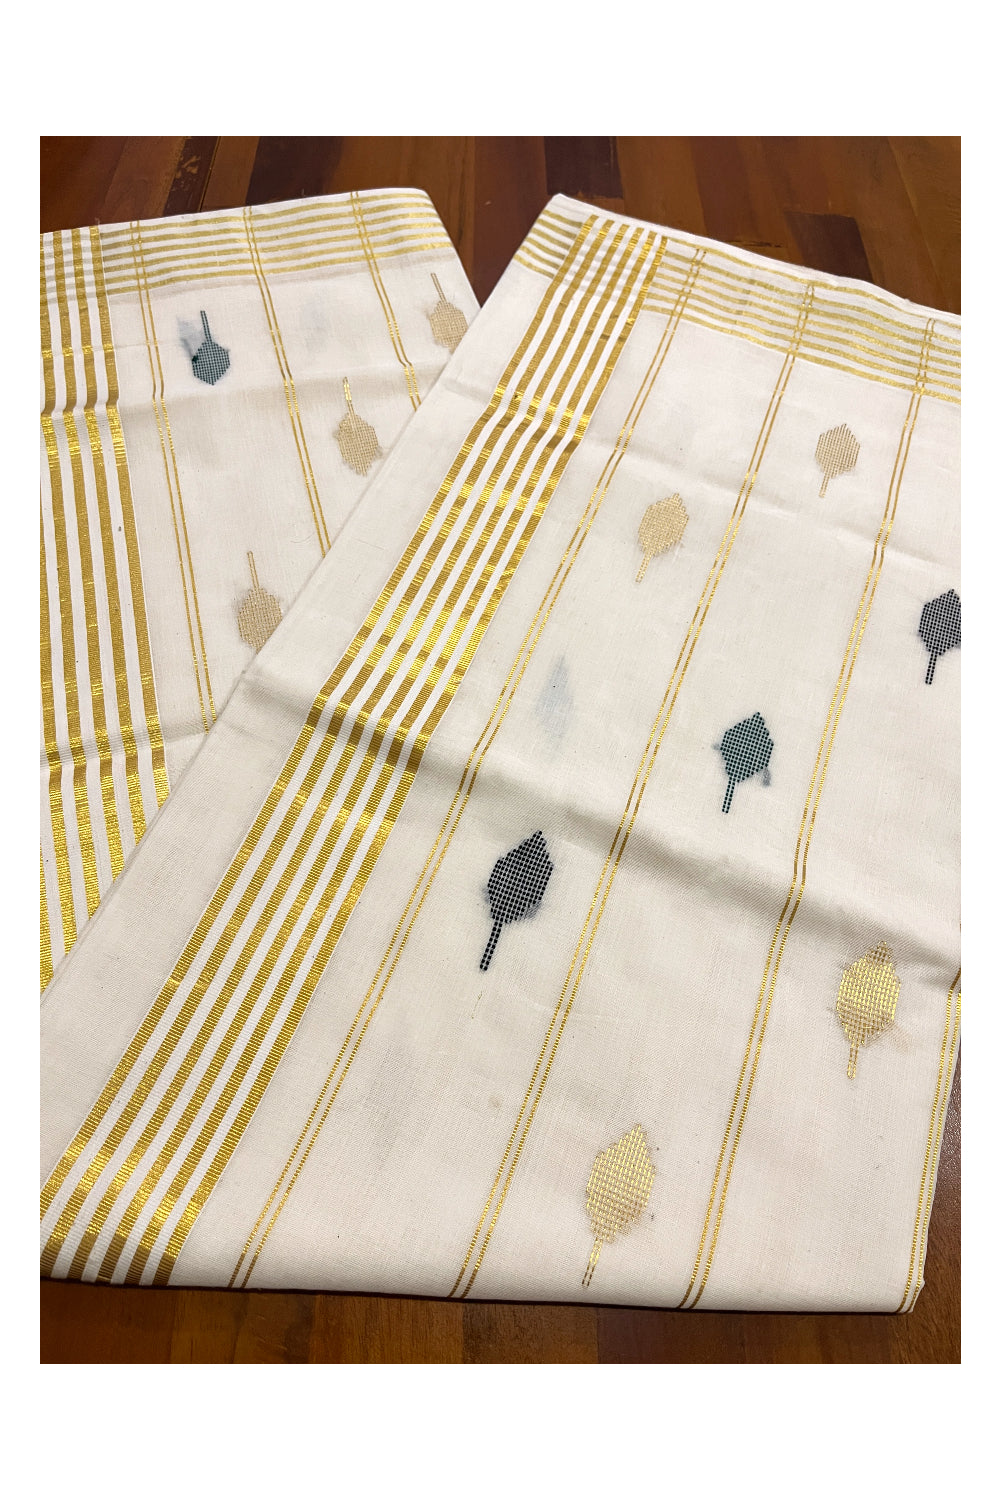 Southloom Premium Handloom Cotton Kerala Saree with Green Golden and Black Butta Works